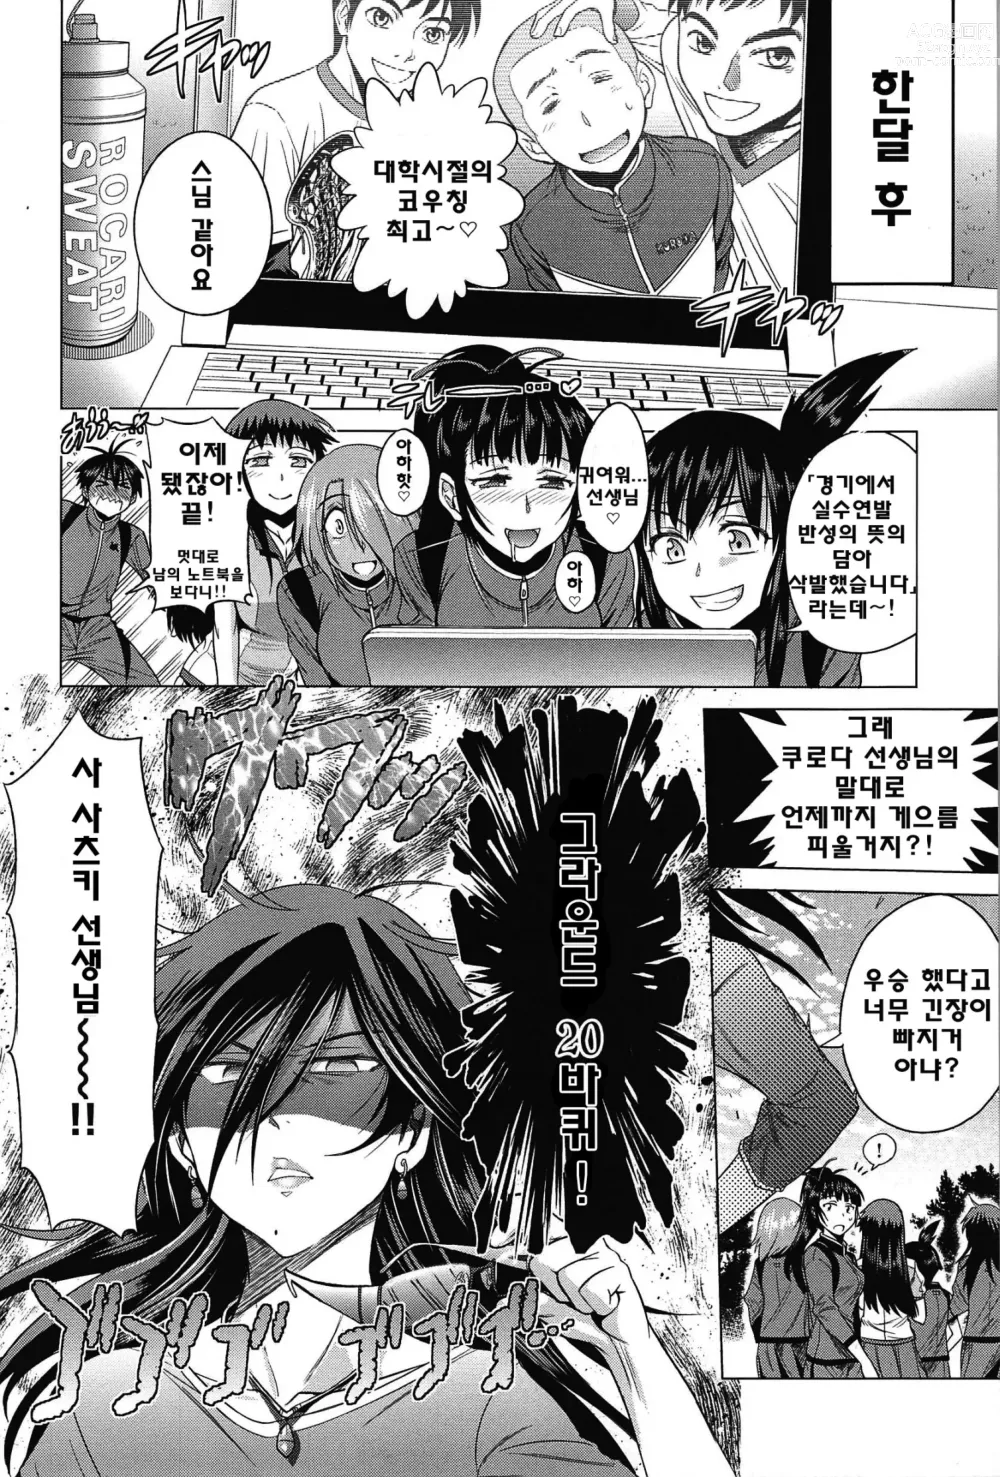 Page 240 of manga Joshi Luck!